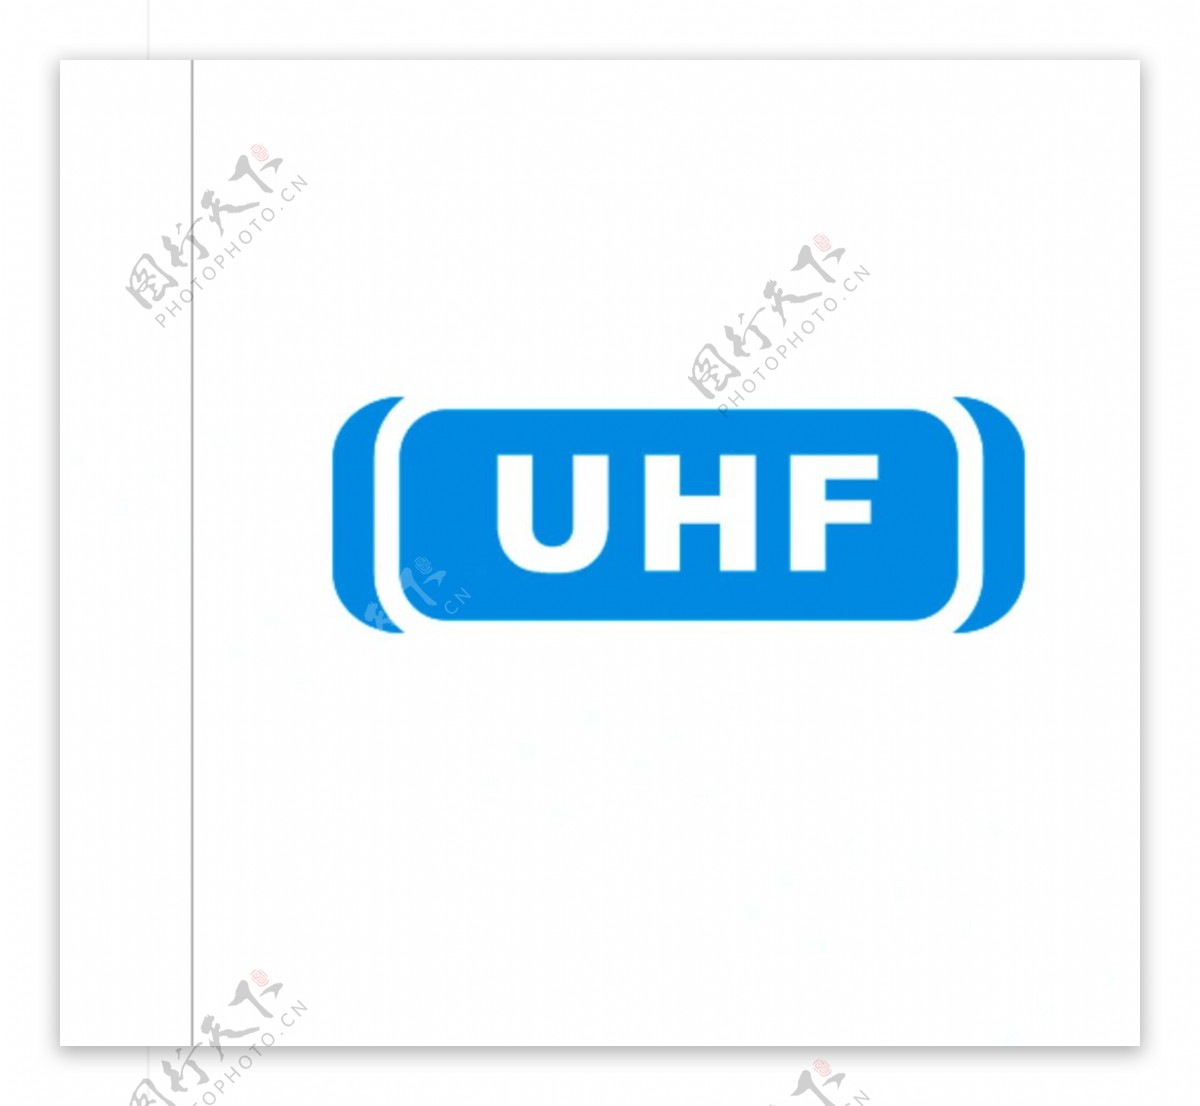 UHF图标